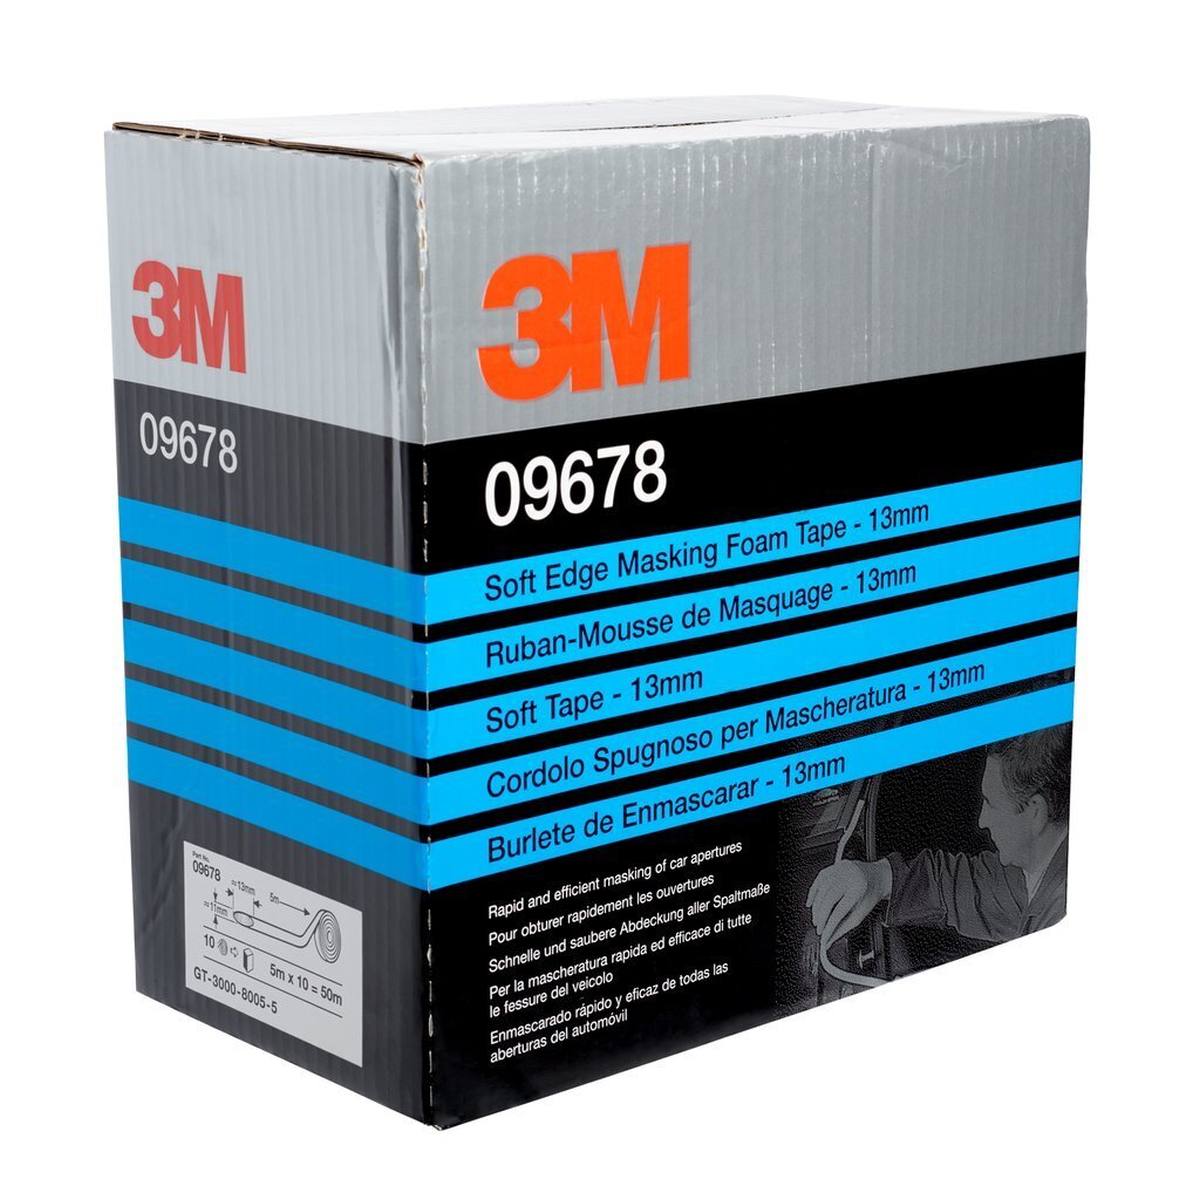 3M Soft Edge Foam Masking Tape, Blanco, 50 m x 13 mm, 1pack = 3pcs #09678